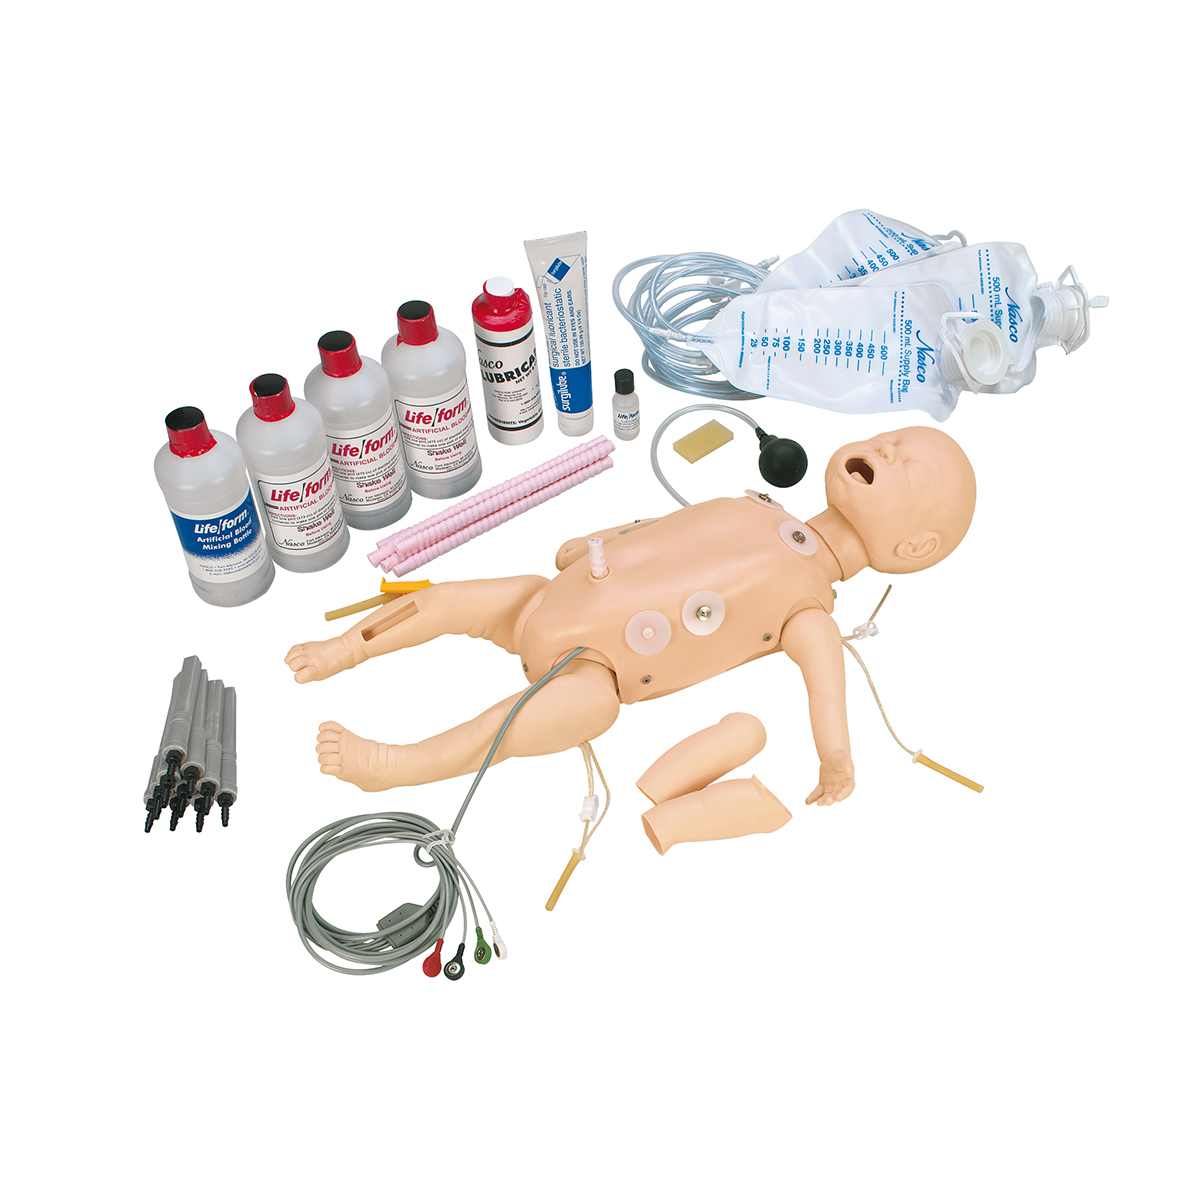 Deluxe Baby-Reanimationspuppe mit EKG, Bestellnummer 1018146, W44090, LF03718U, Nasco Life/form